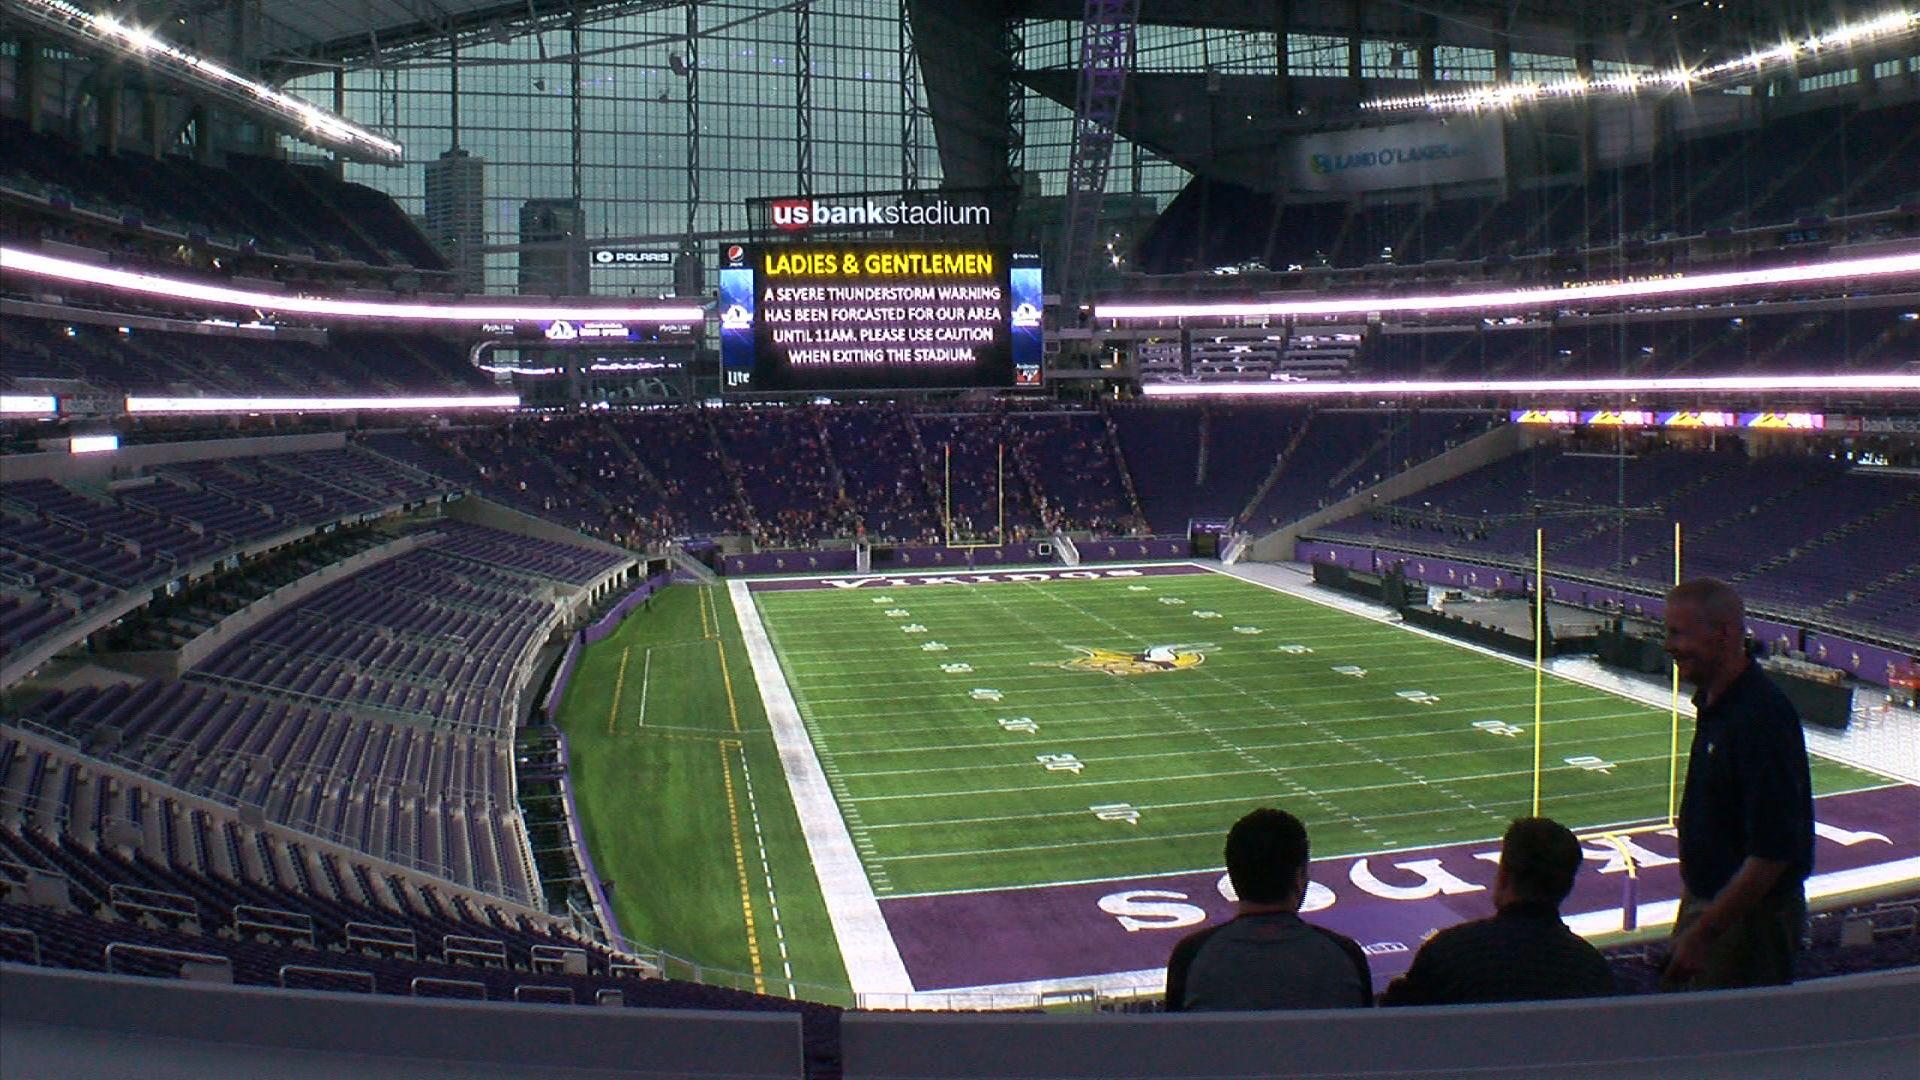 New Minnesota Vikings Stadium Makes Sunday Night Debut